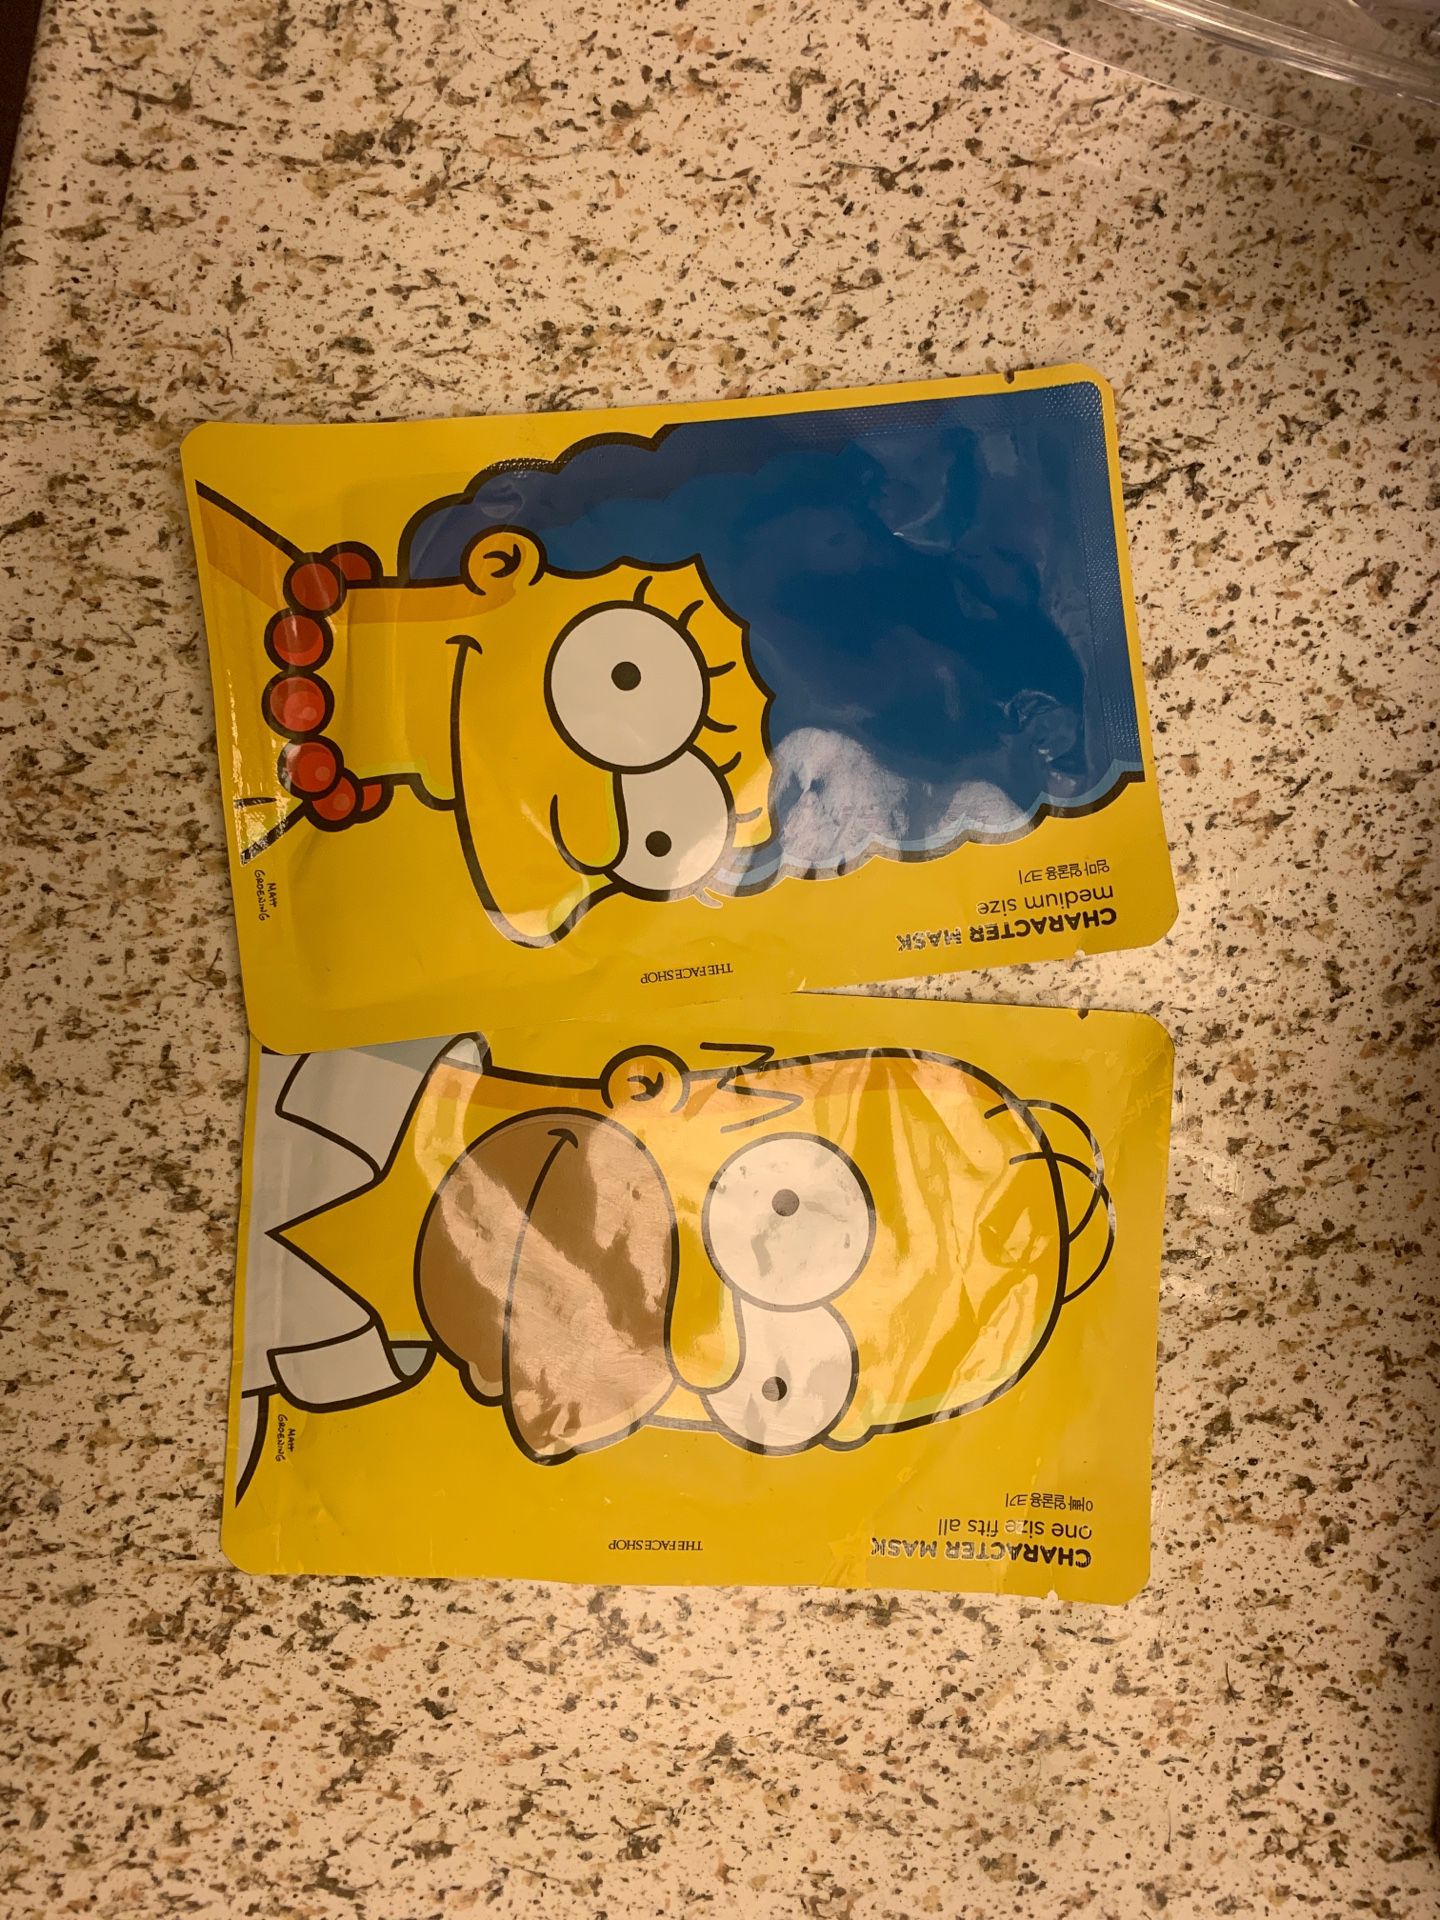 Simpson’s face mask